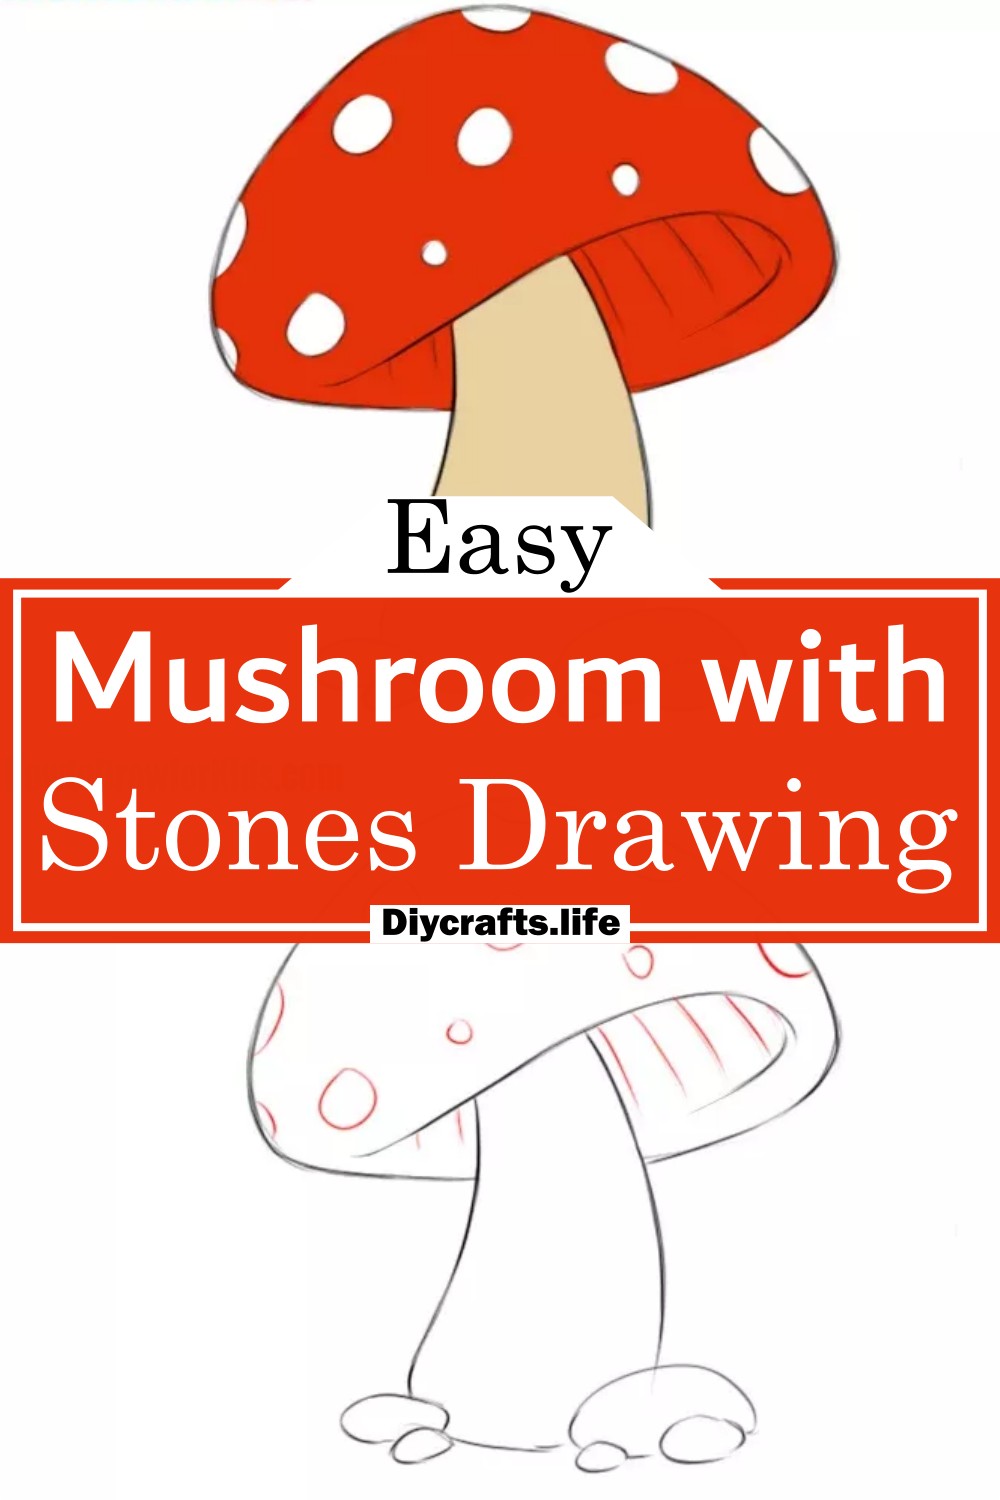 Mushroom with Stones Drawing